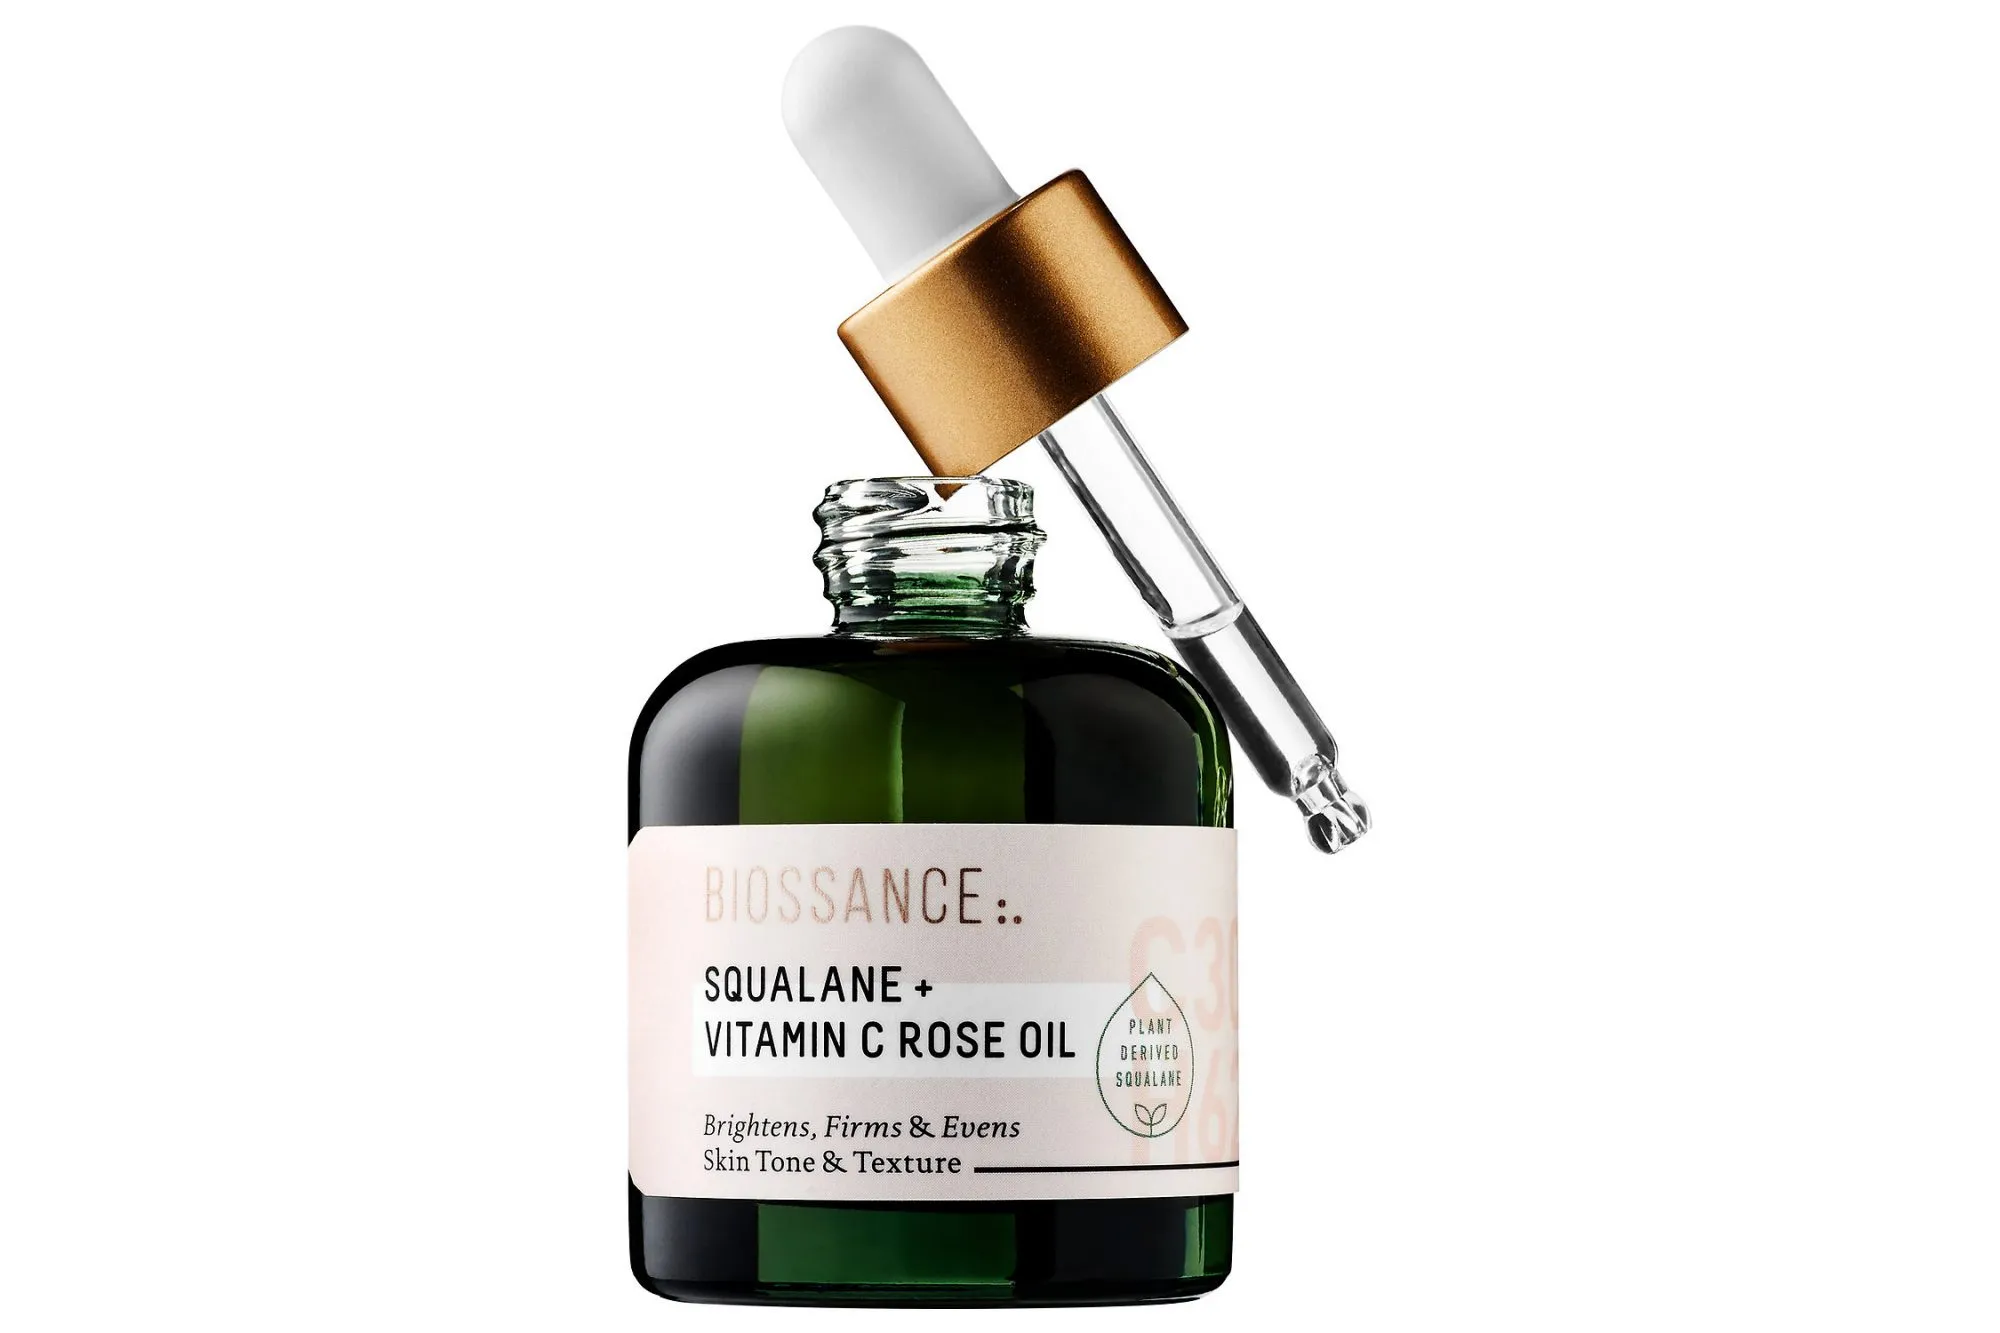 biossance-squalane-vitamin-c-rose-oil-review